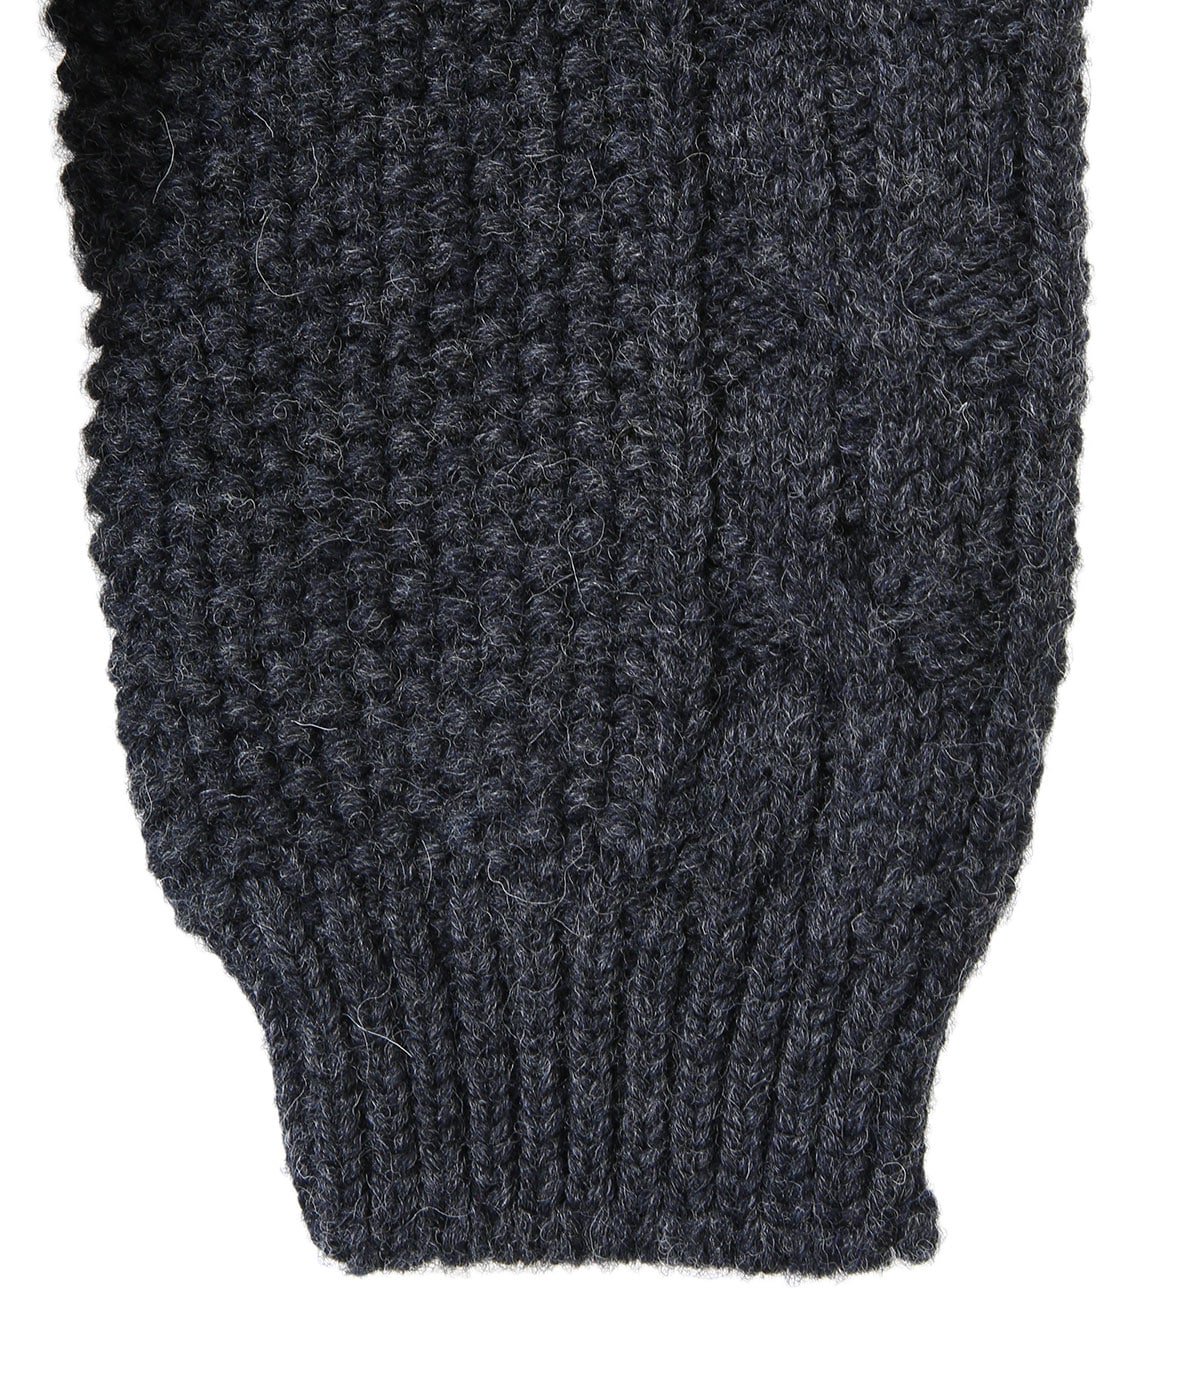 Crewneck Sweater(Size:38.40.42.44)